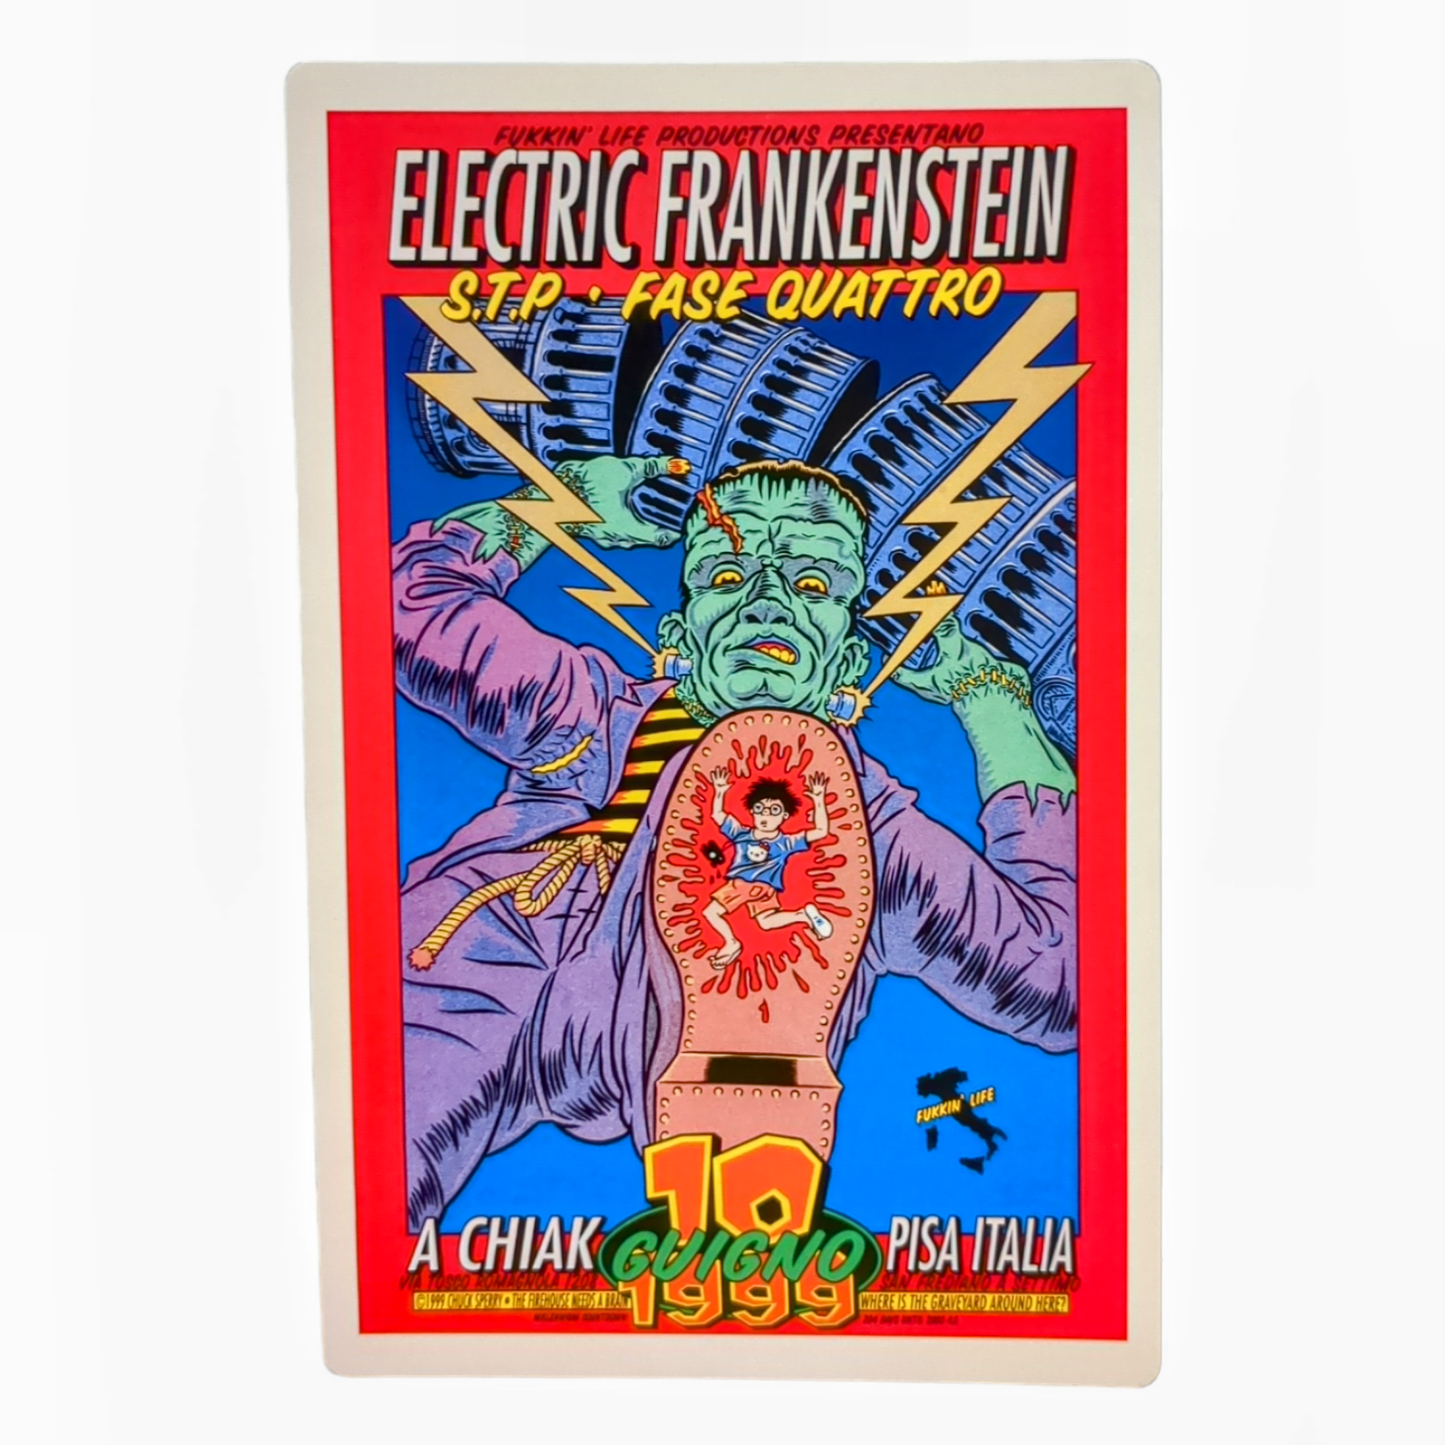 Chuck Sperry Electric Frankenstein Chiak Pisa Toscana, Italy 1999 Art Card Approx. 8.5 x 5.5 in